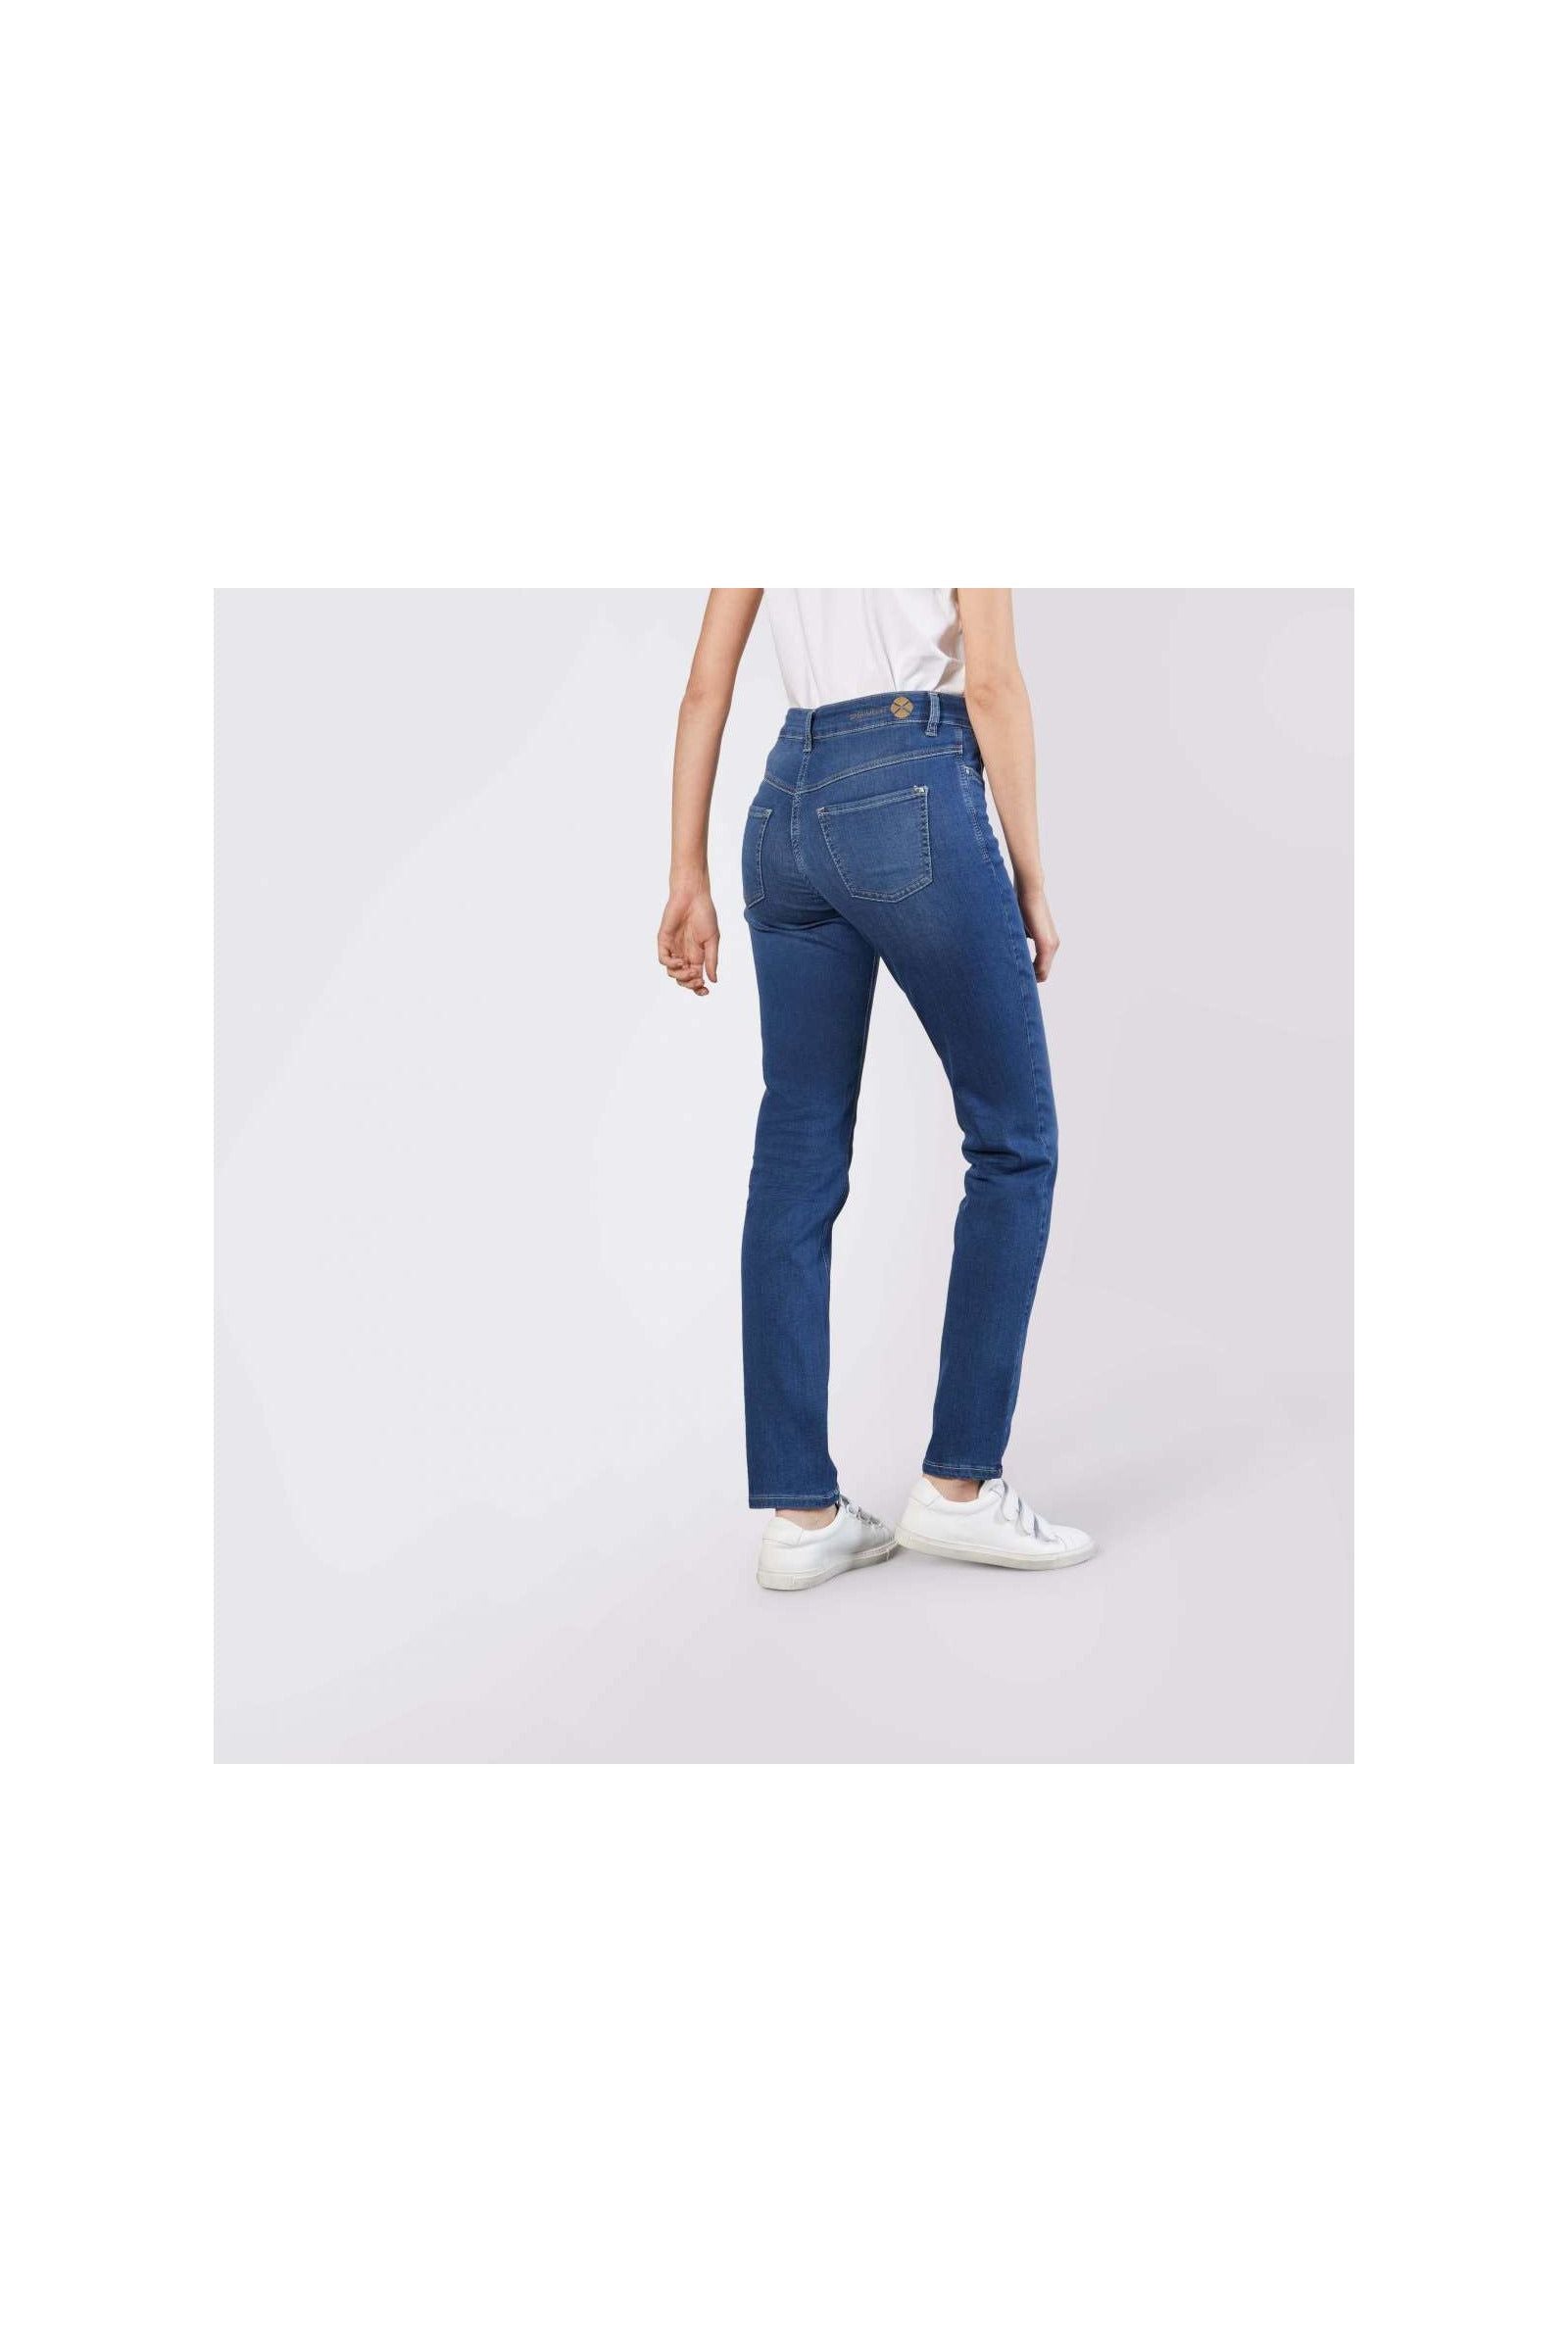 Mac Jeans D569 5401-90-355L Robertson Straight Mid – Legs Denim Dream Blue Authe | Madison